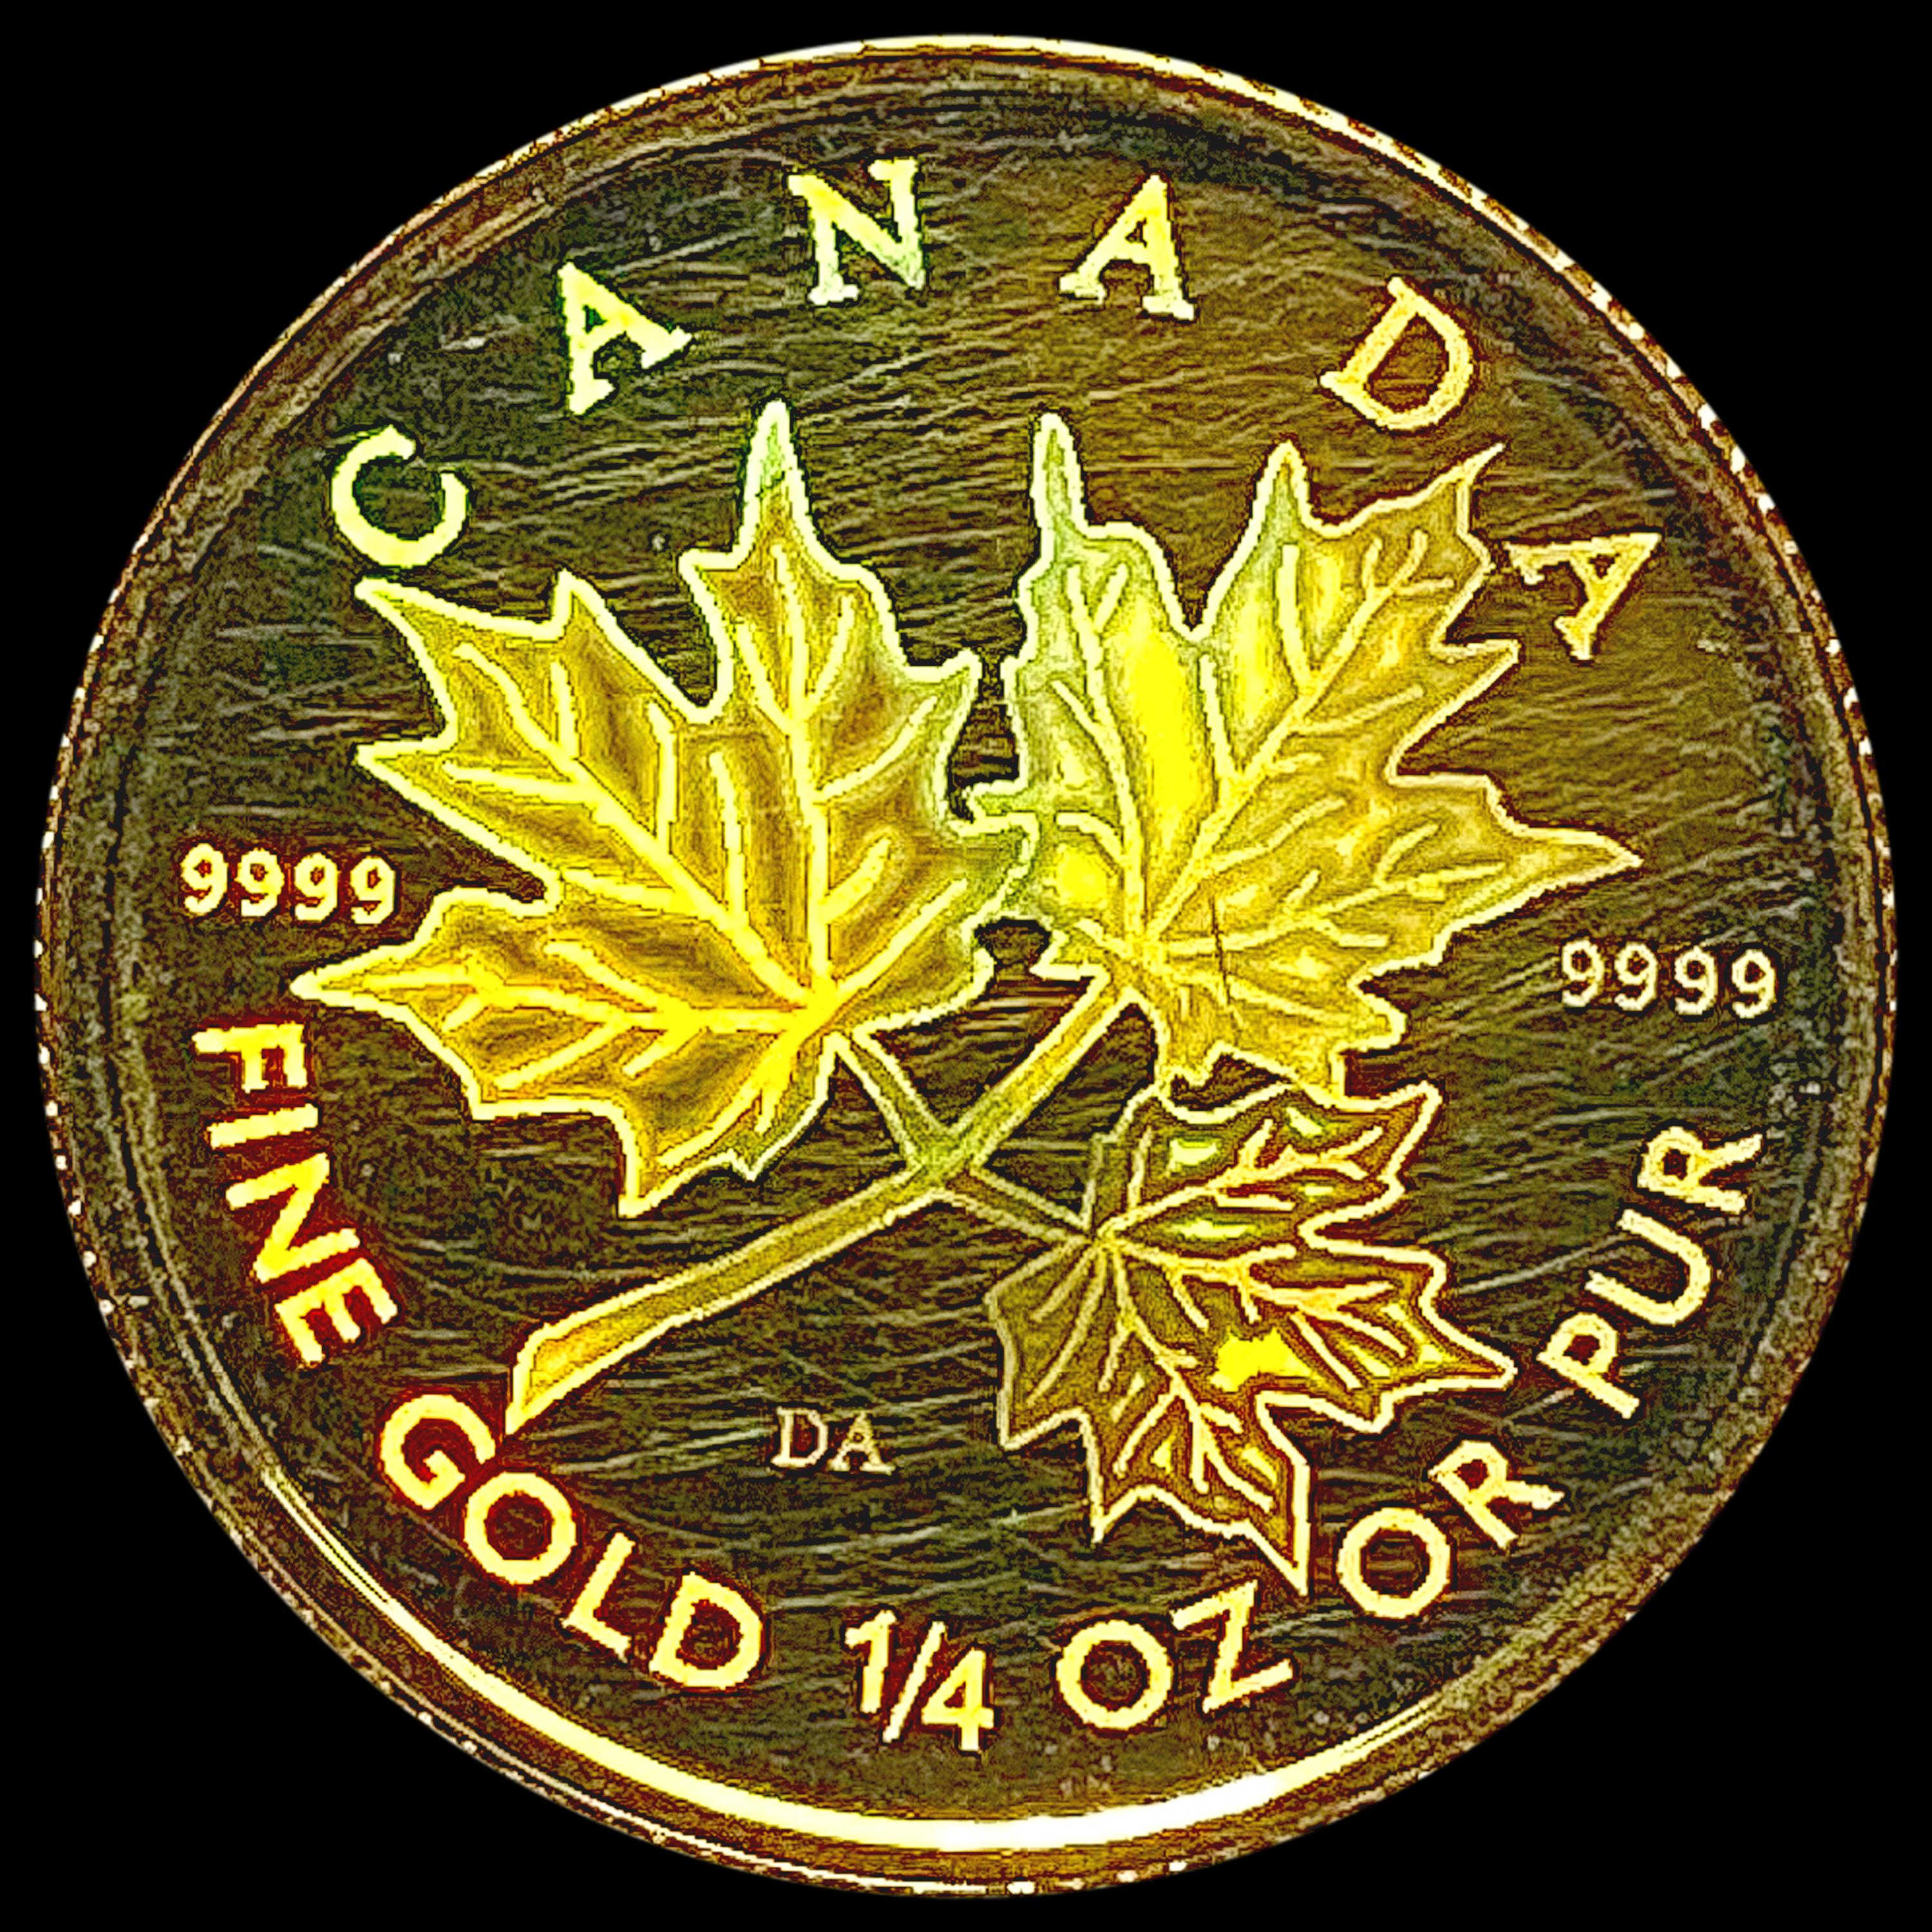 2001 Canada 1/4oz Gold $10 UNCIRCULATED